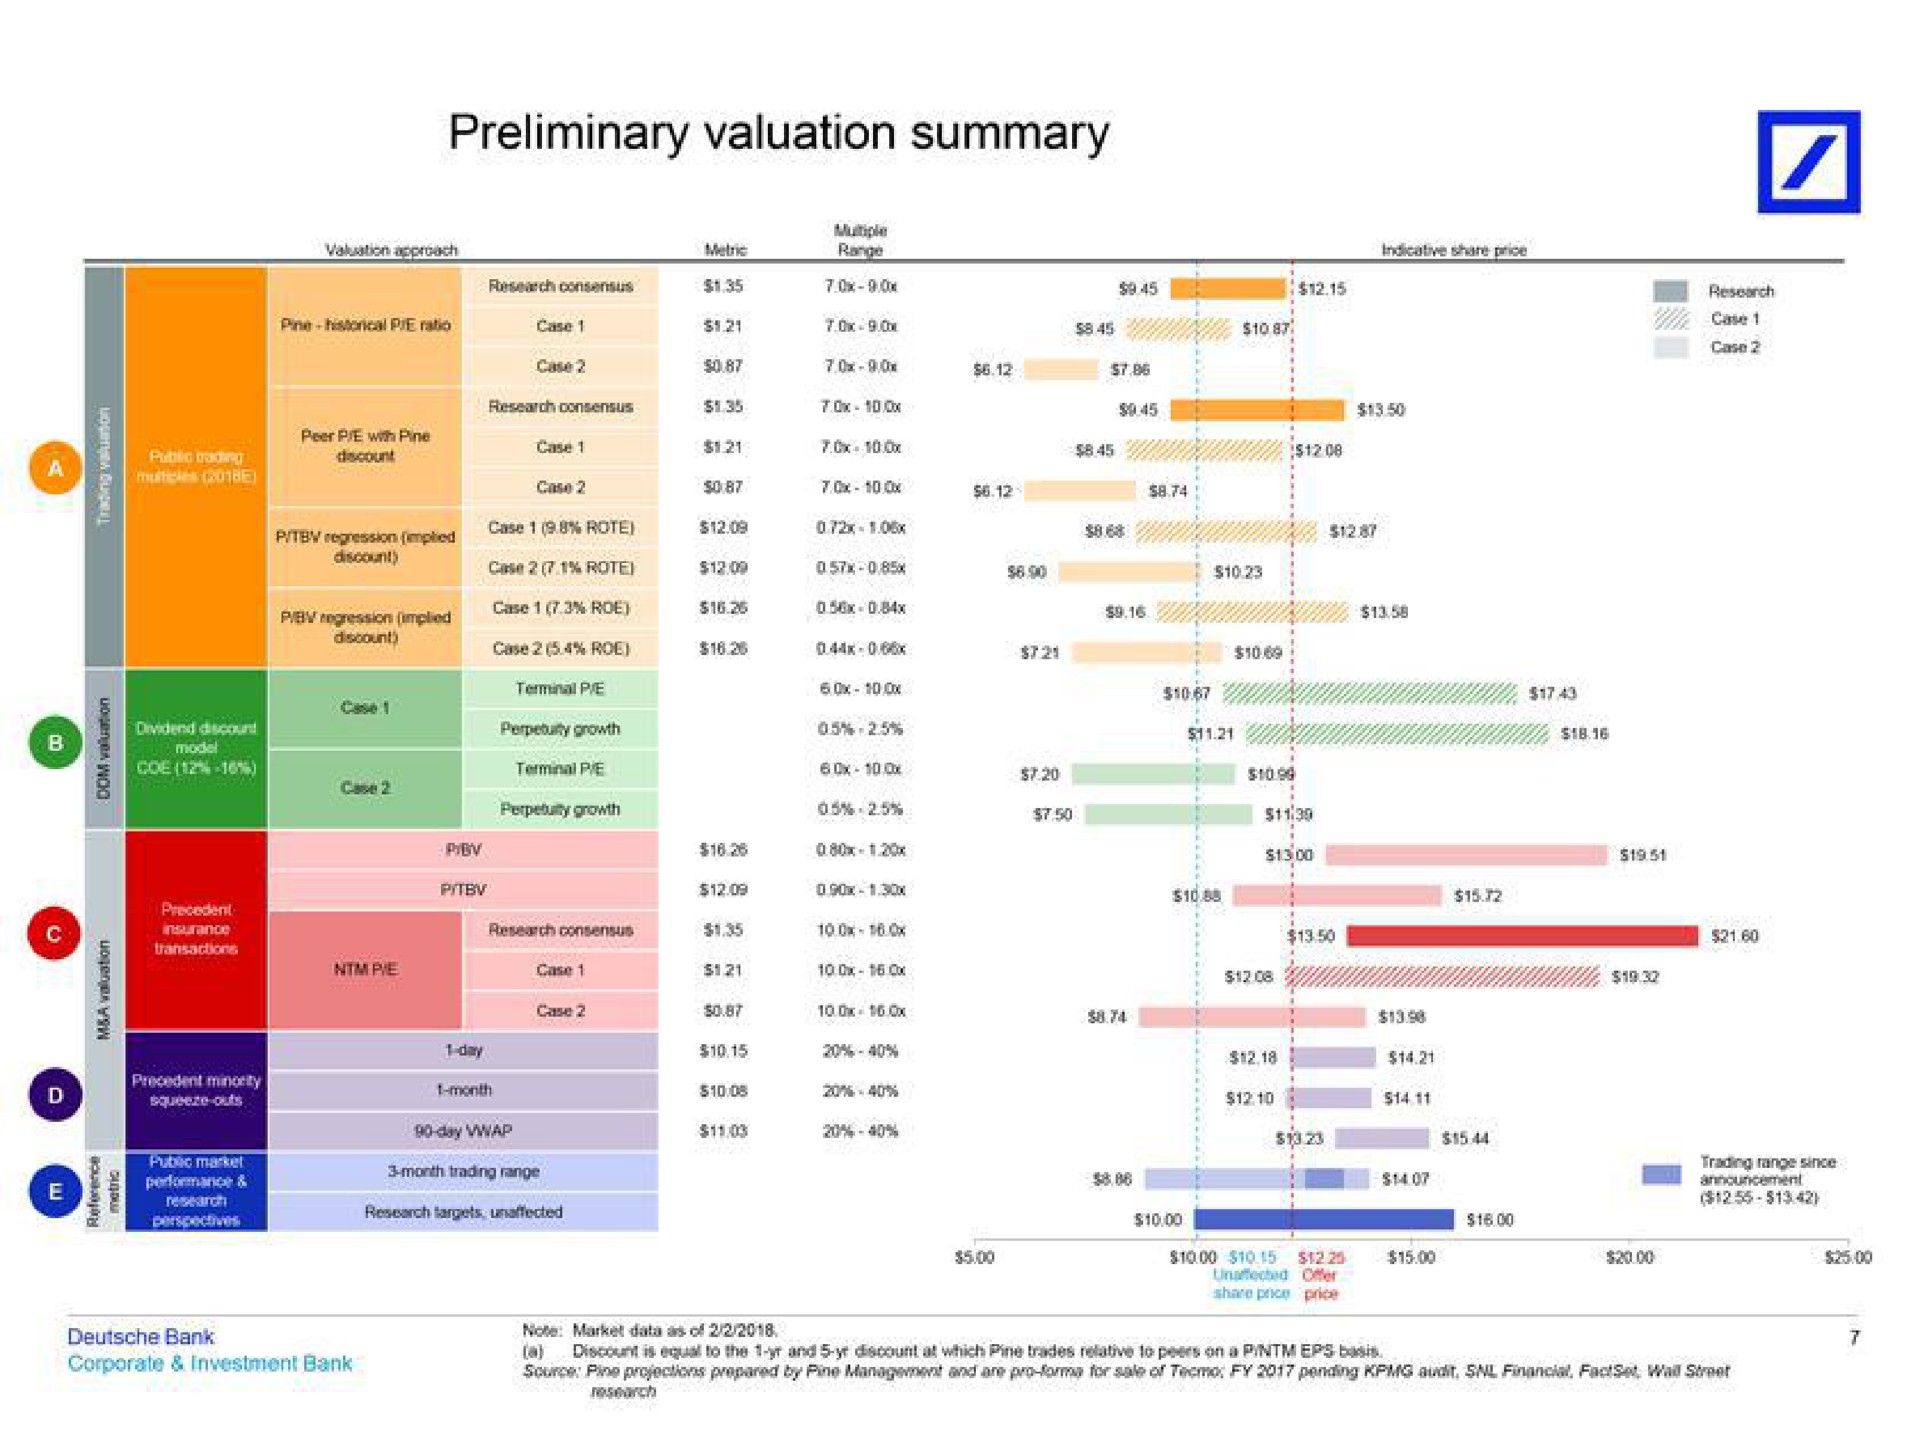 preliminary valuation summary risen | Deutsche Bank